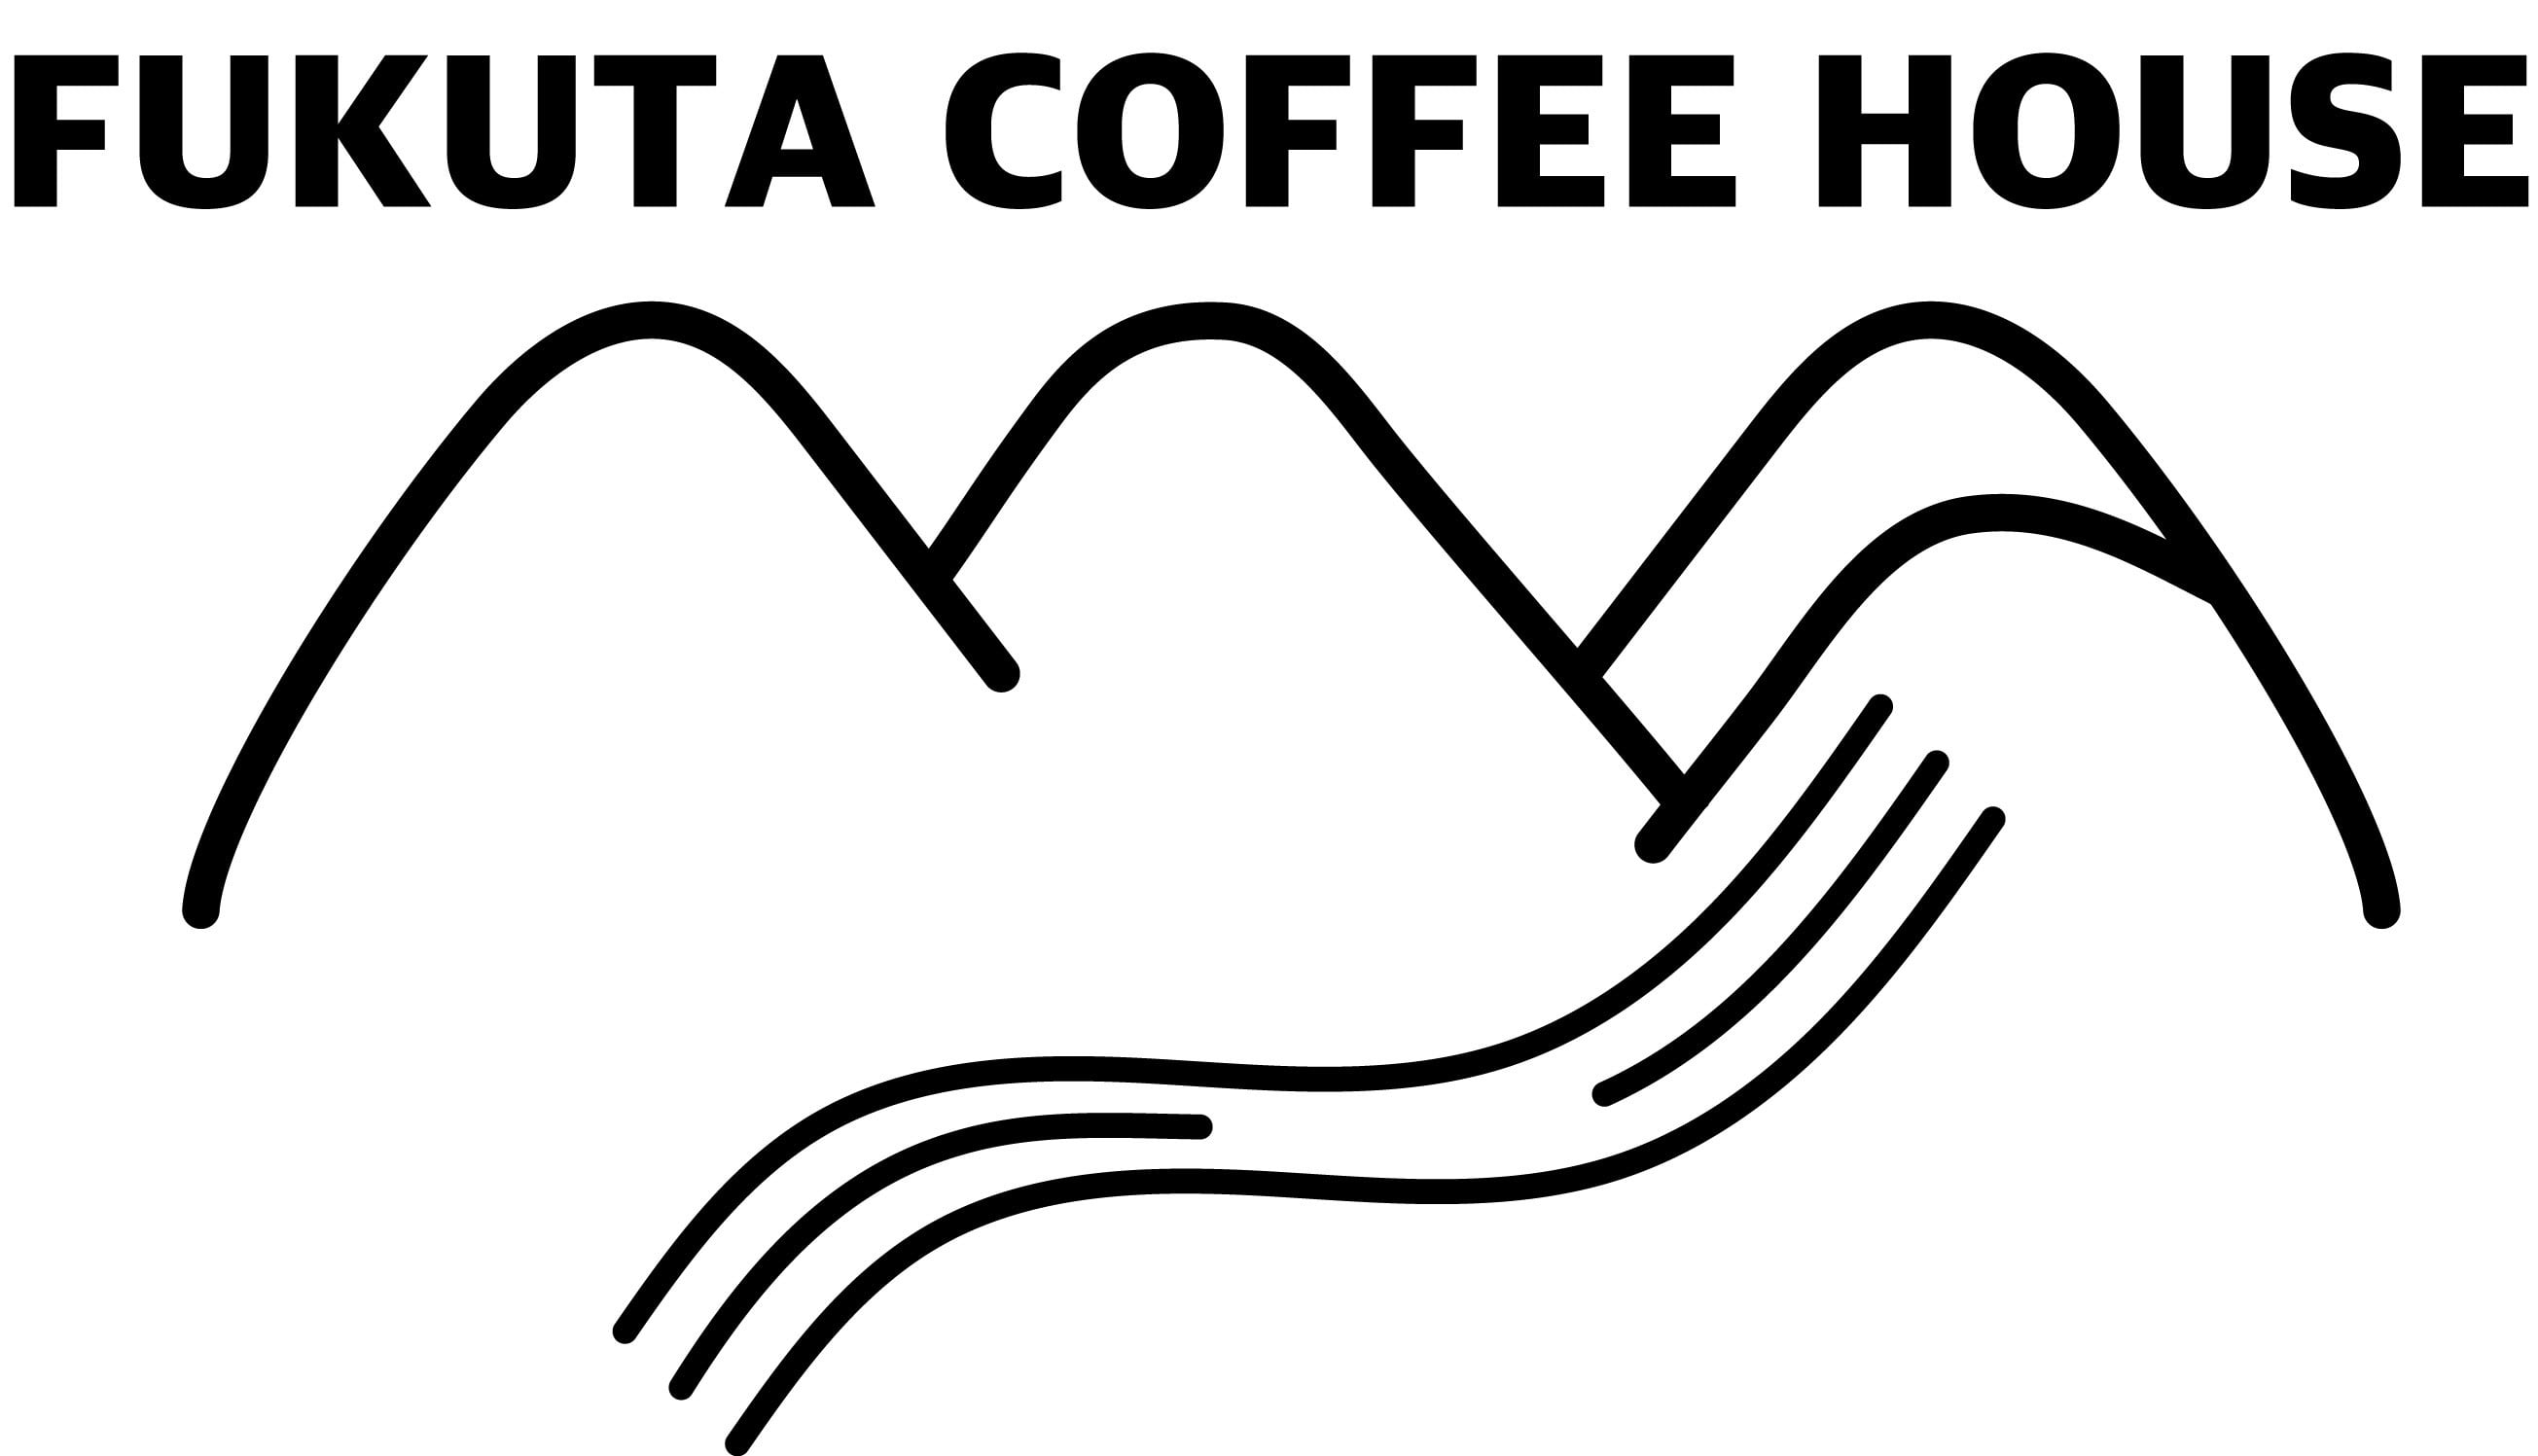 FUKUTA COFFEE HOUSE 